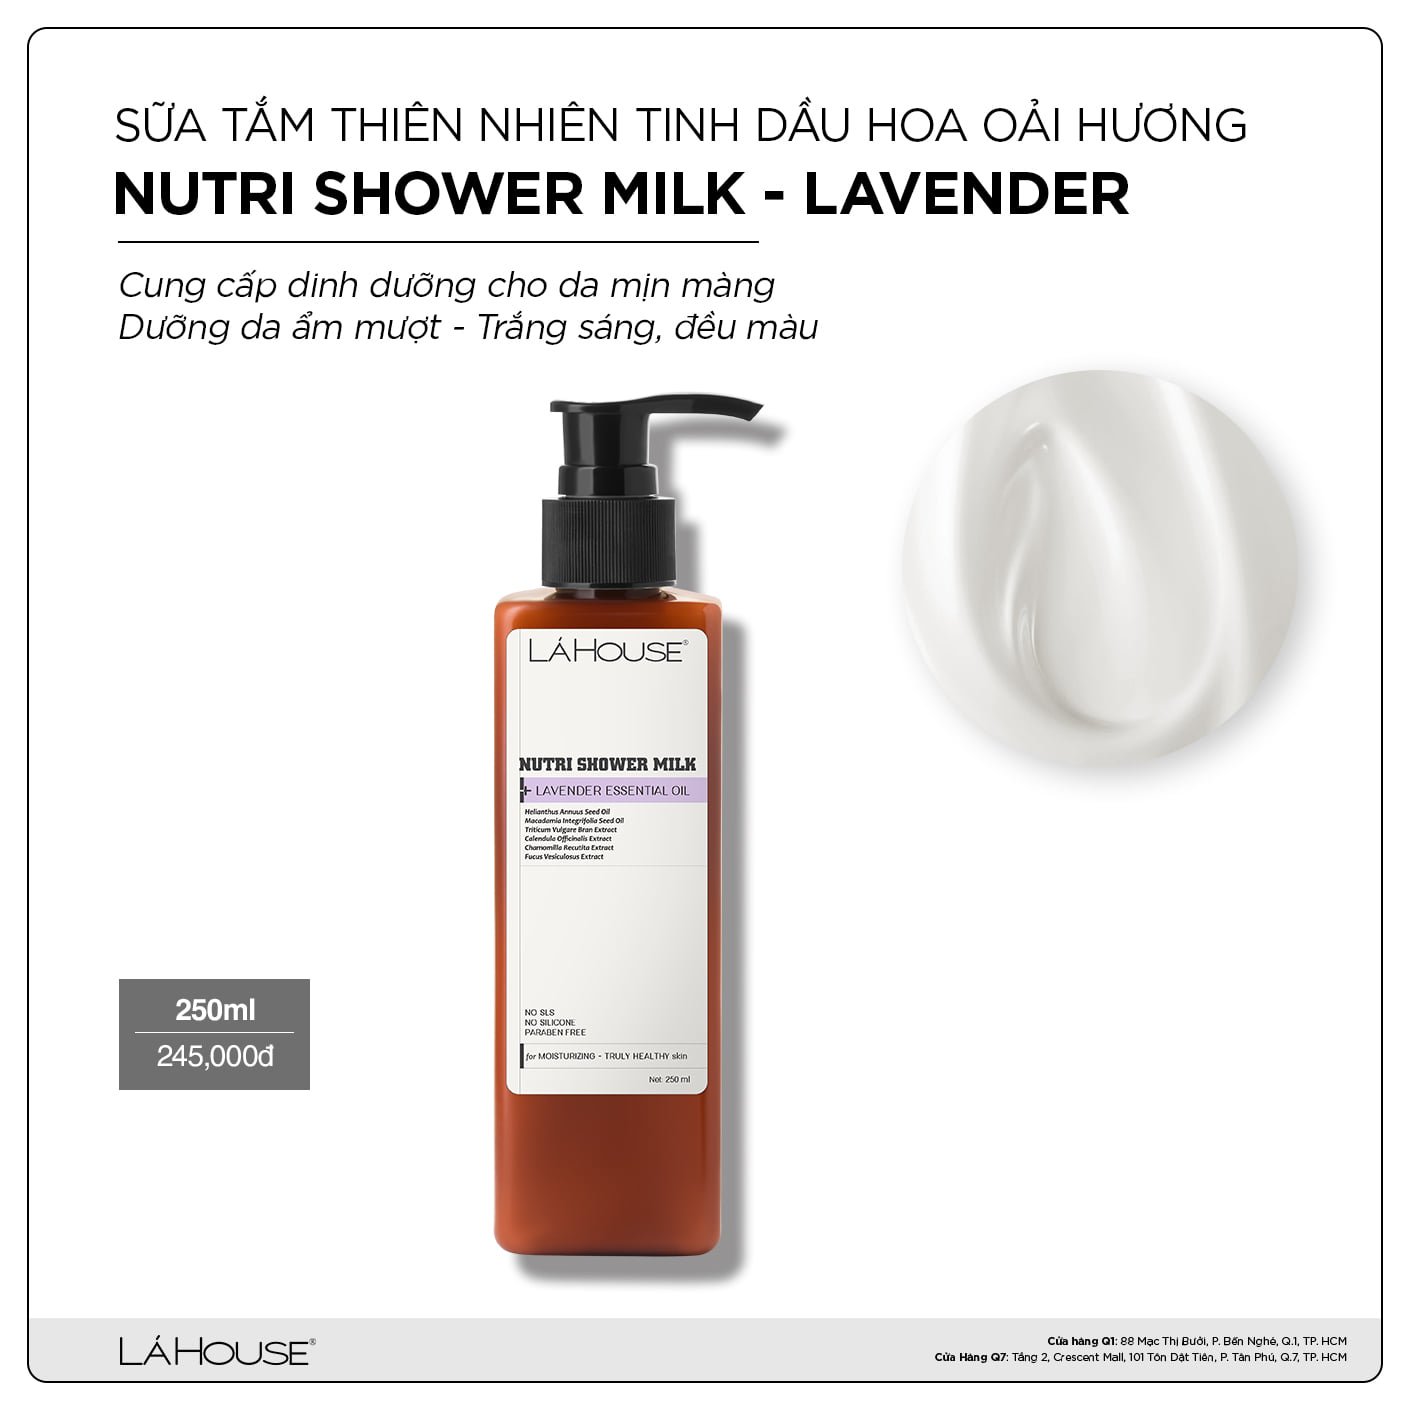 Sữa tắm làm dịu,làm sạch da Lá House Nutri Shower Milk 250ml Lavender/ Peppermint